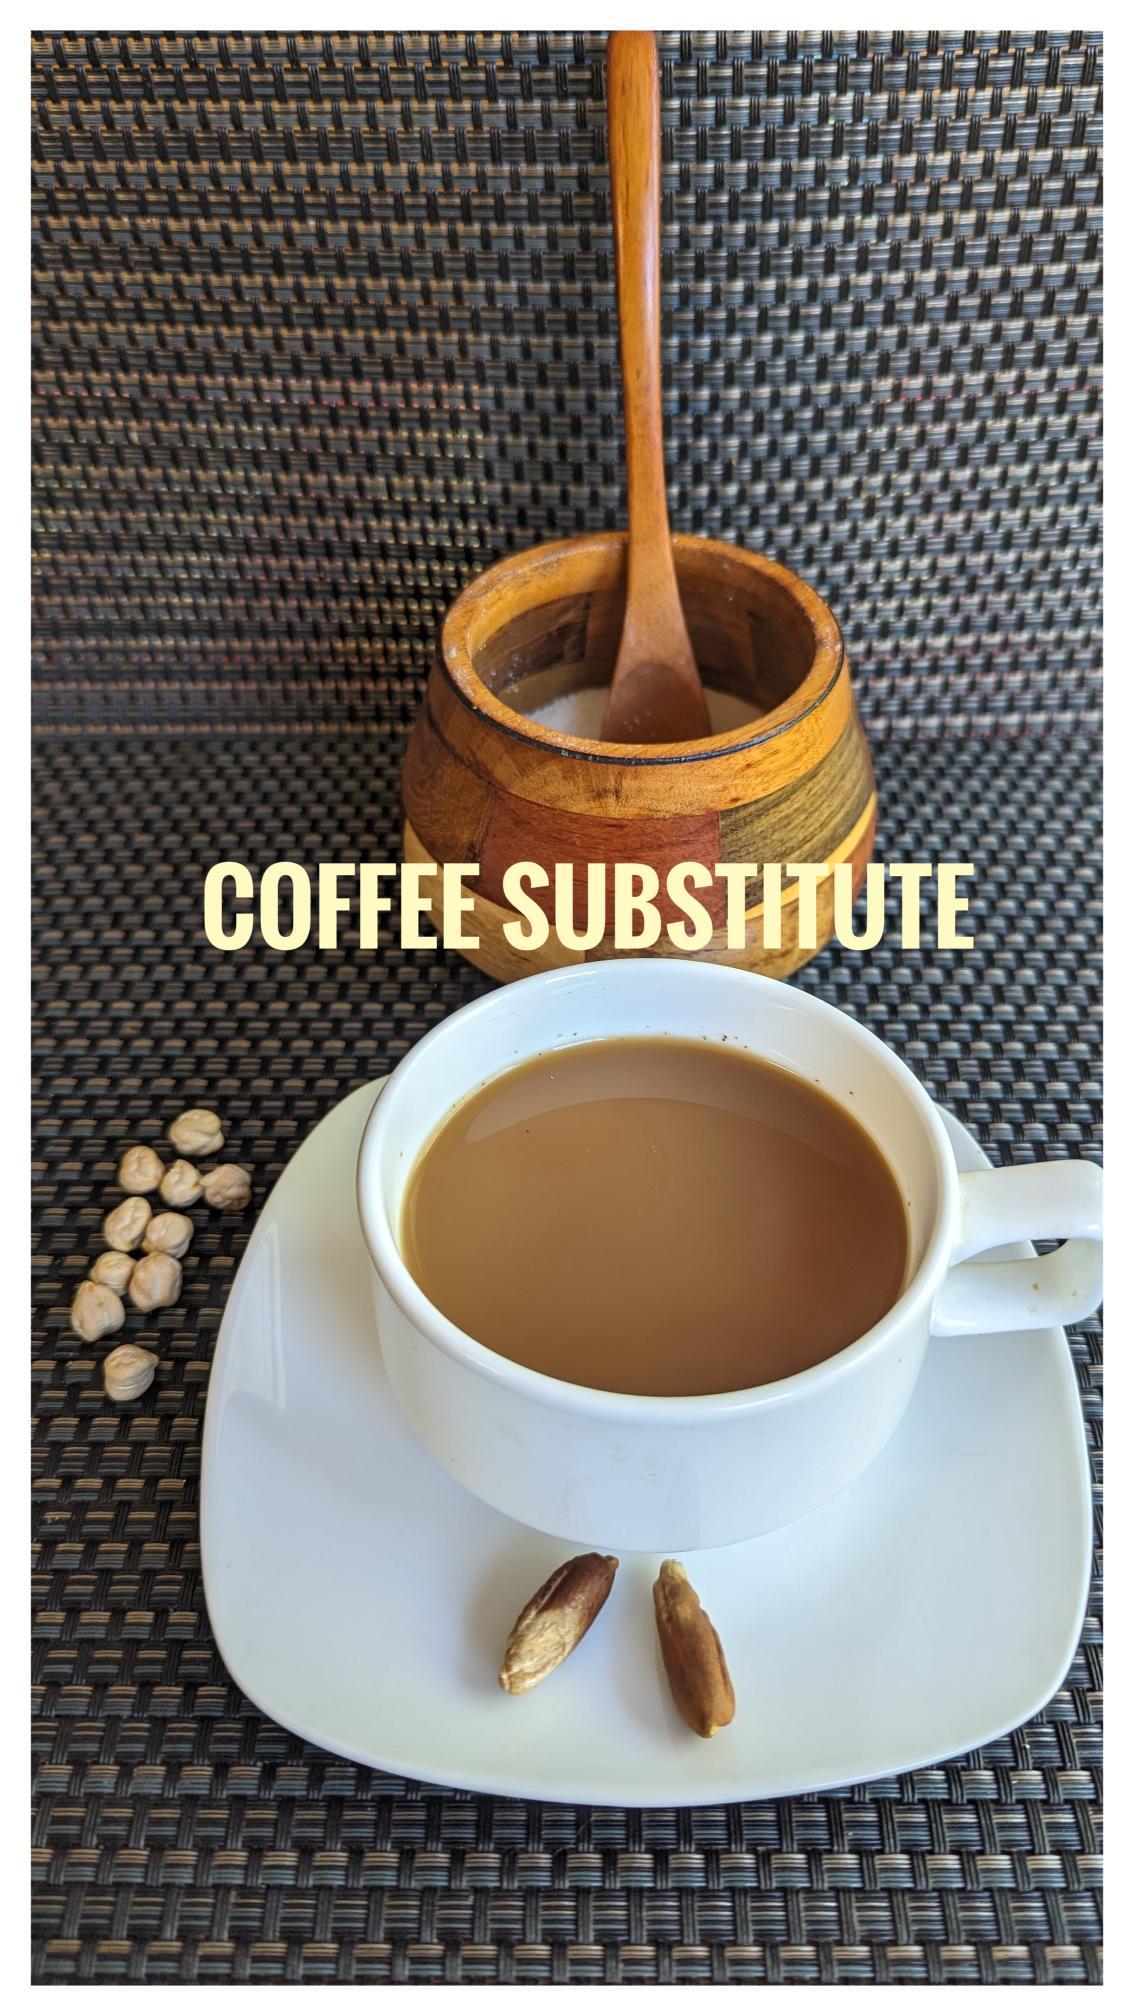 Coffee substitute